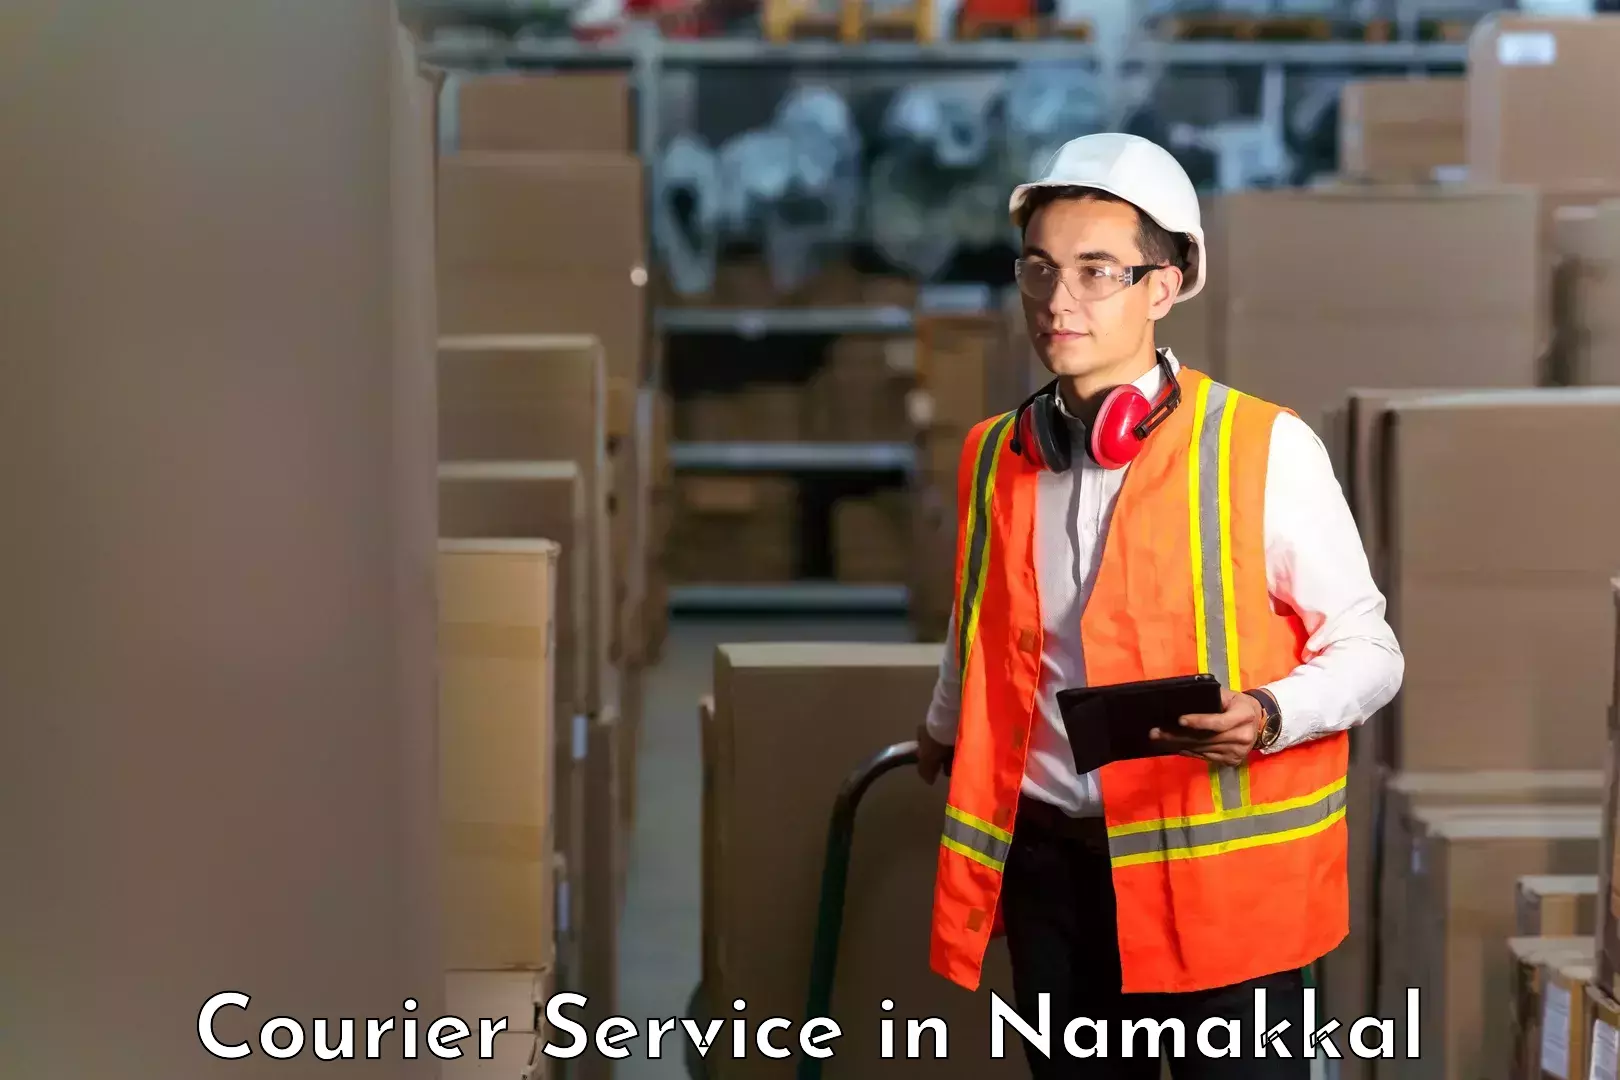 Comprehensive parcel tracking in Namakkal